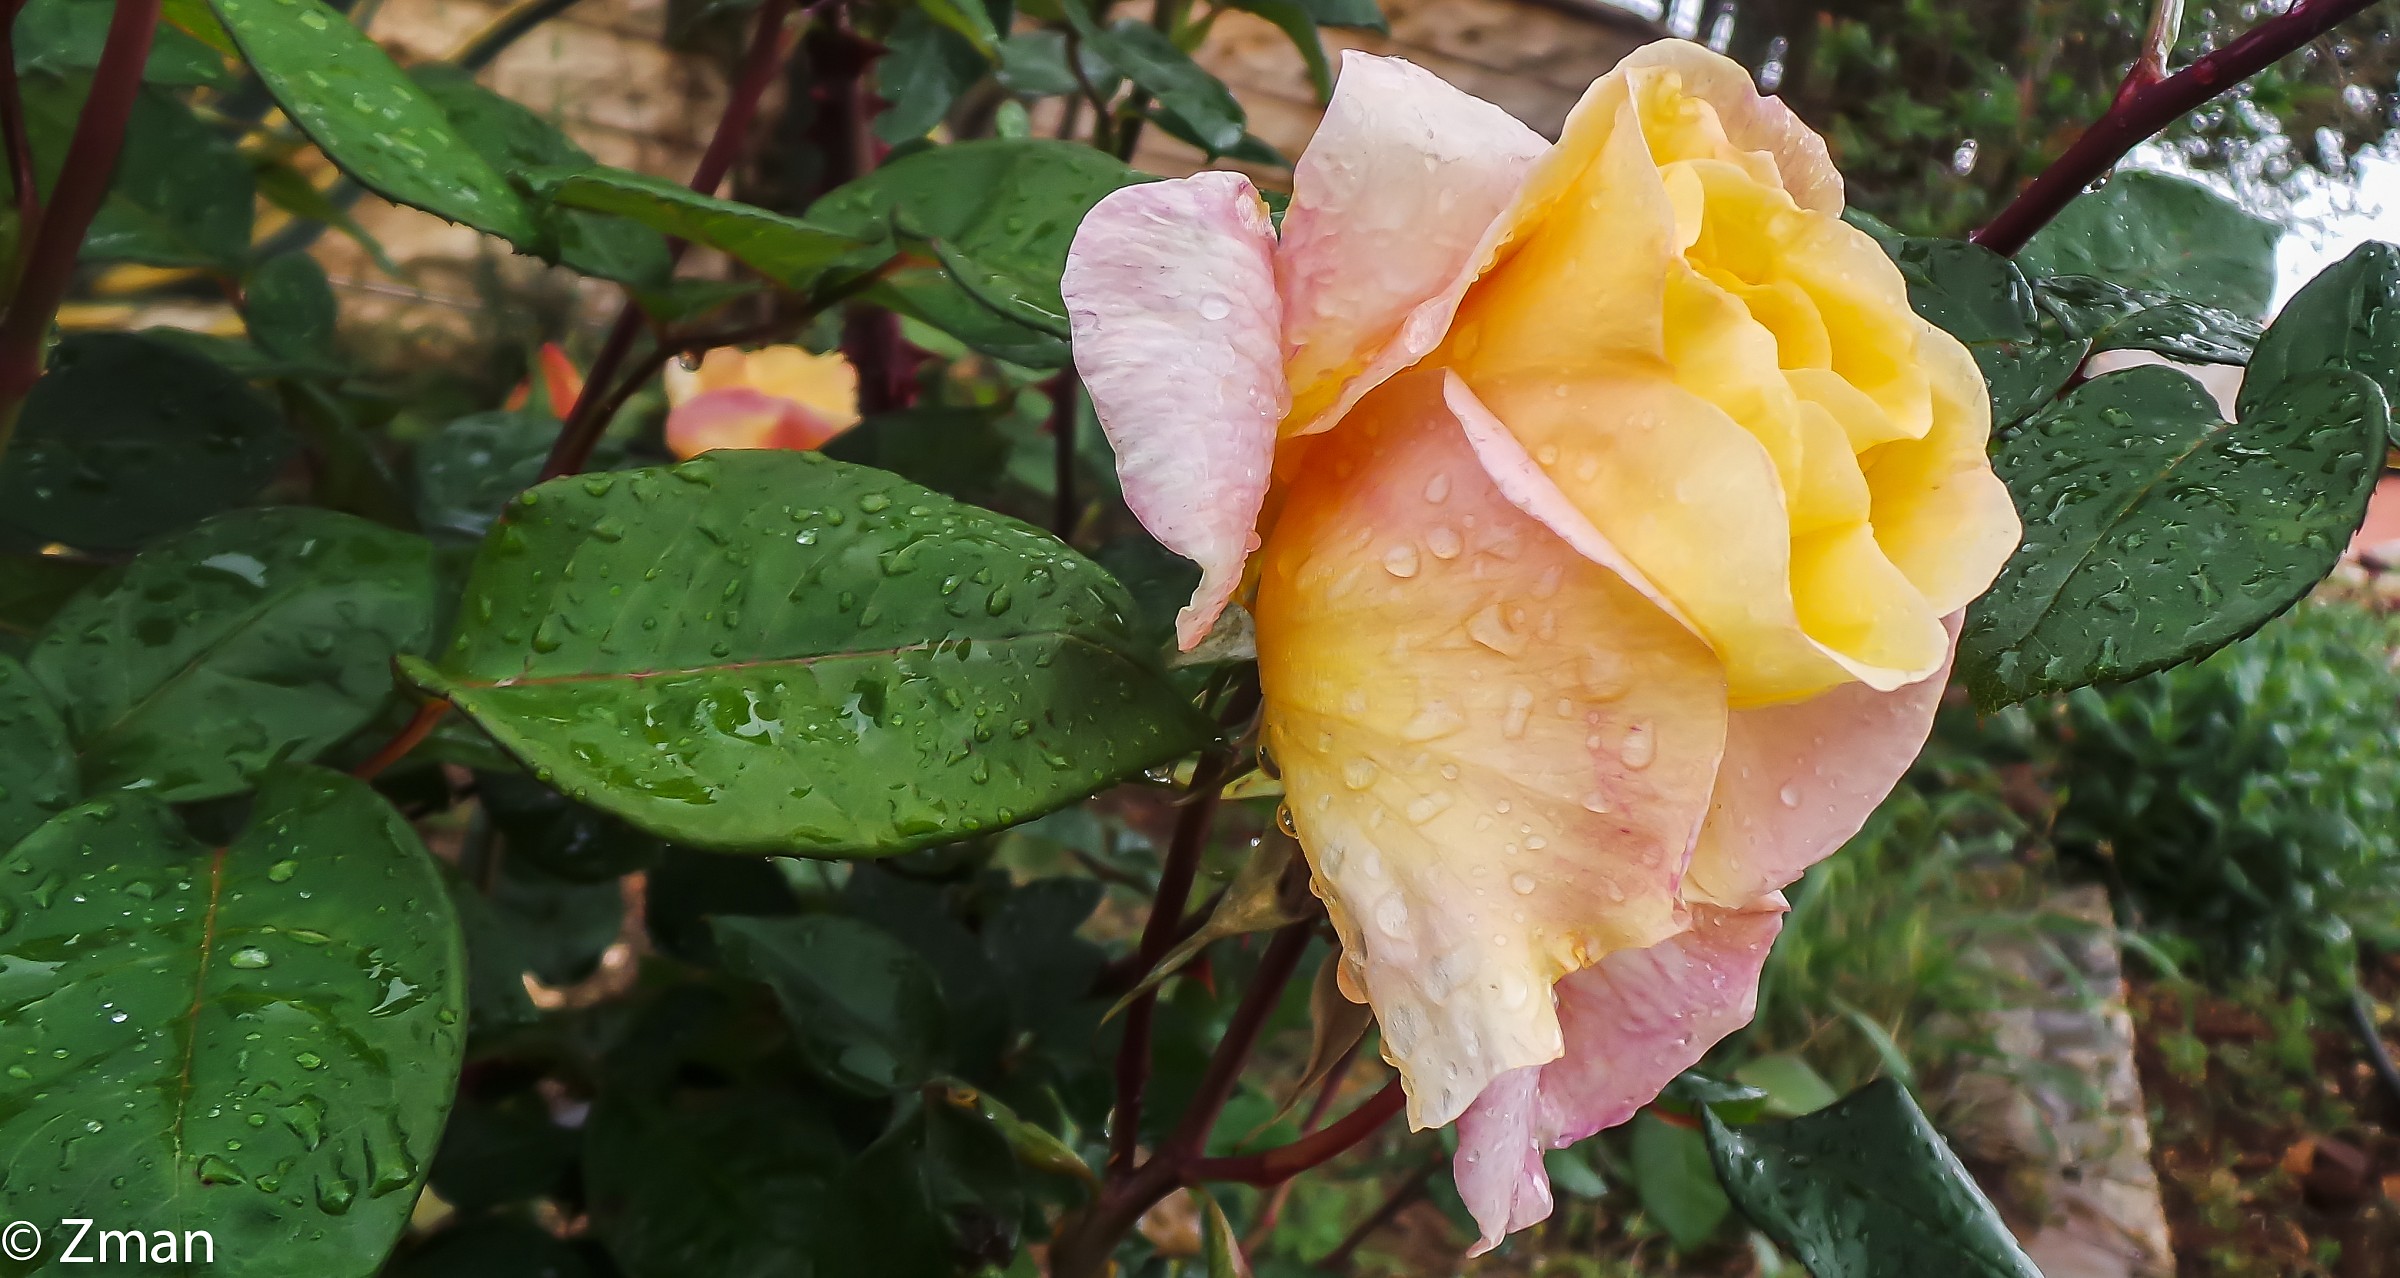 Wonderful rose...